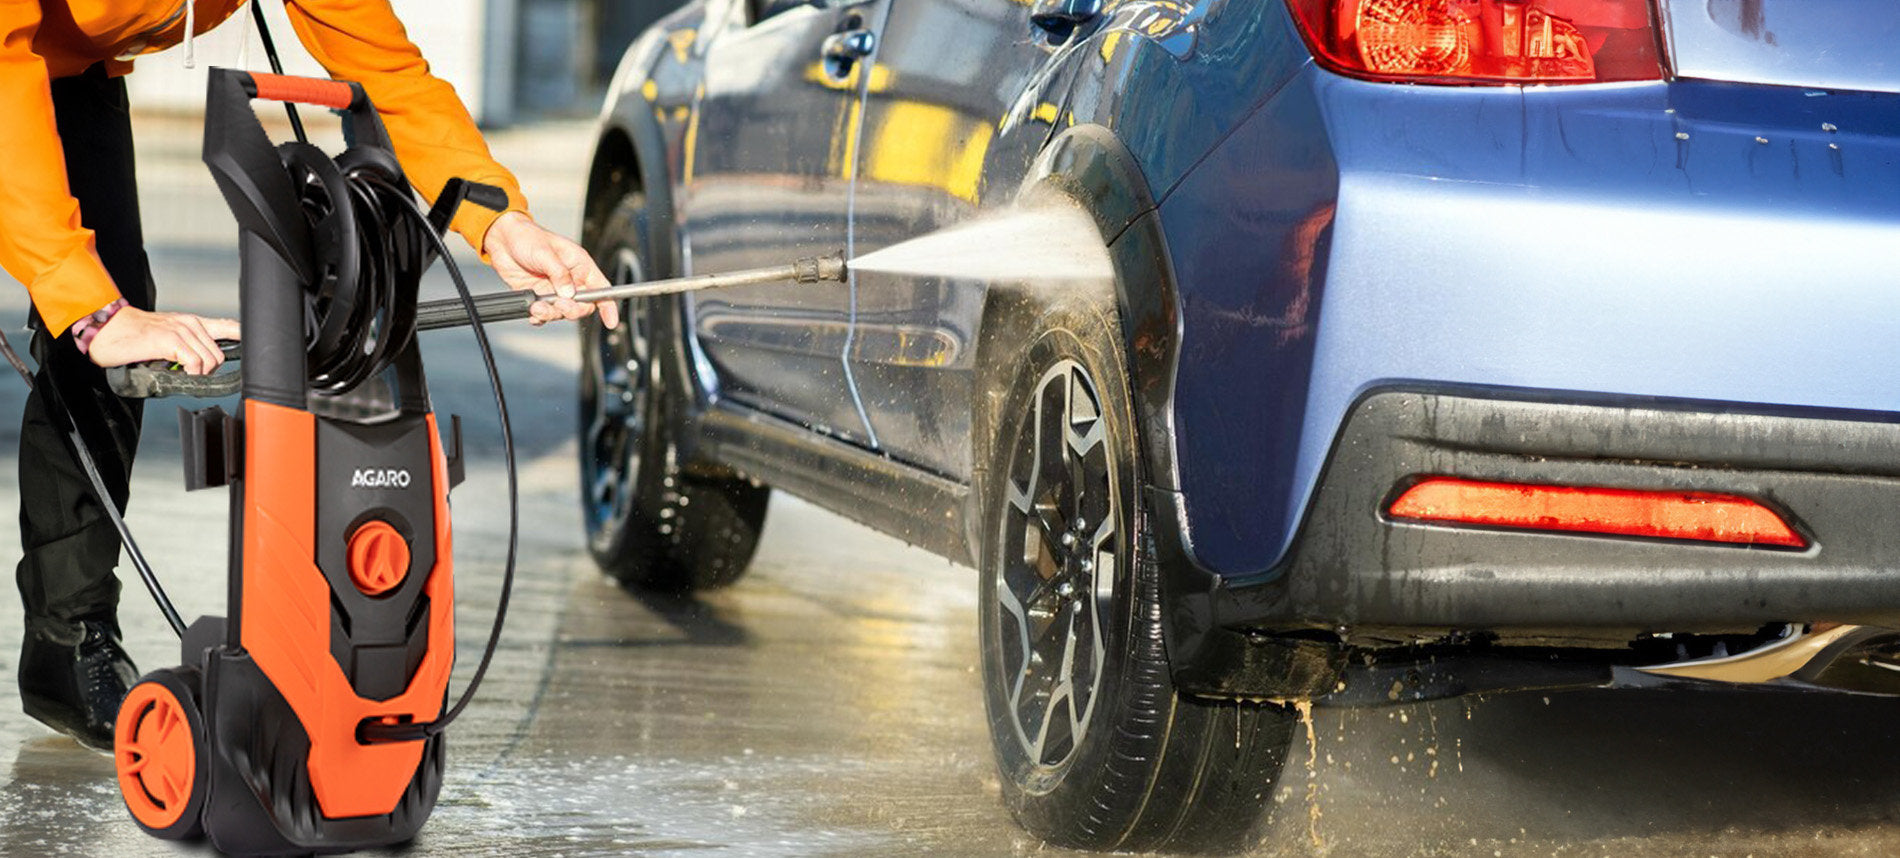 Car Power Washer Reviews of Top Models: Make Smart Choices – Agaro